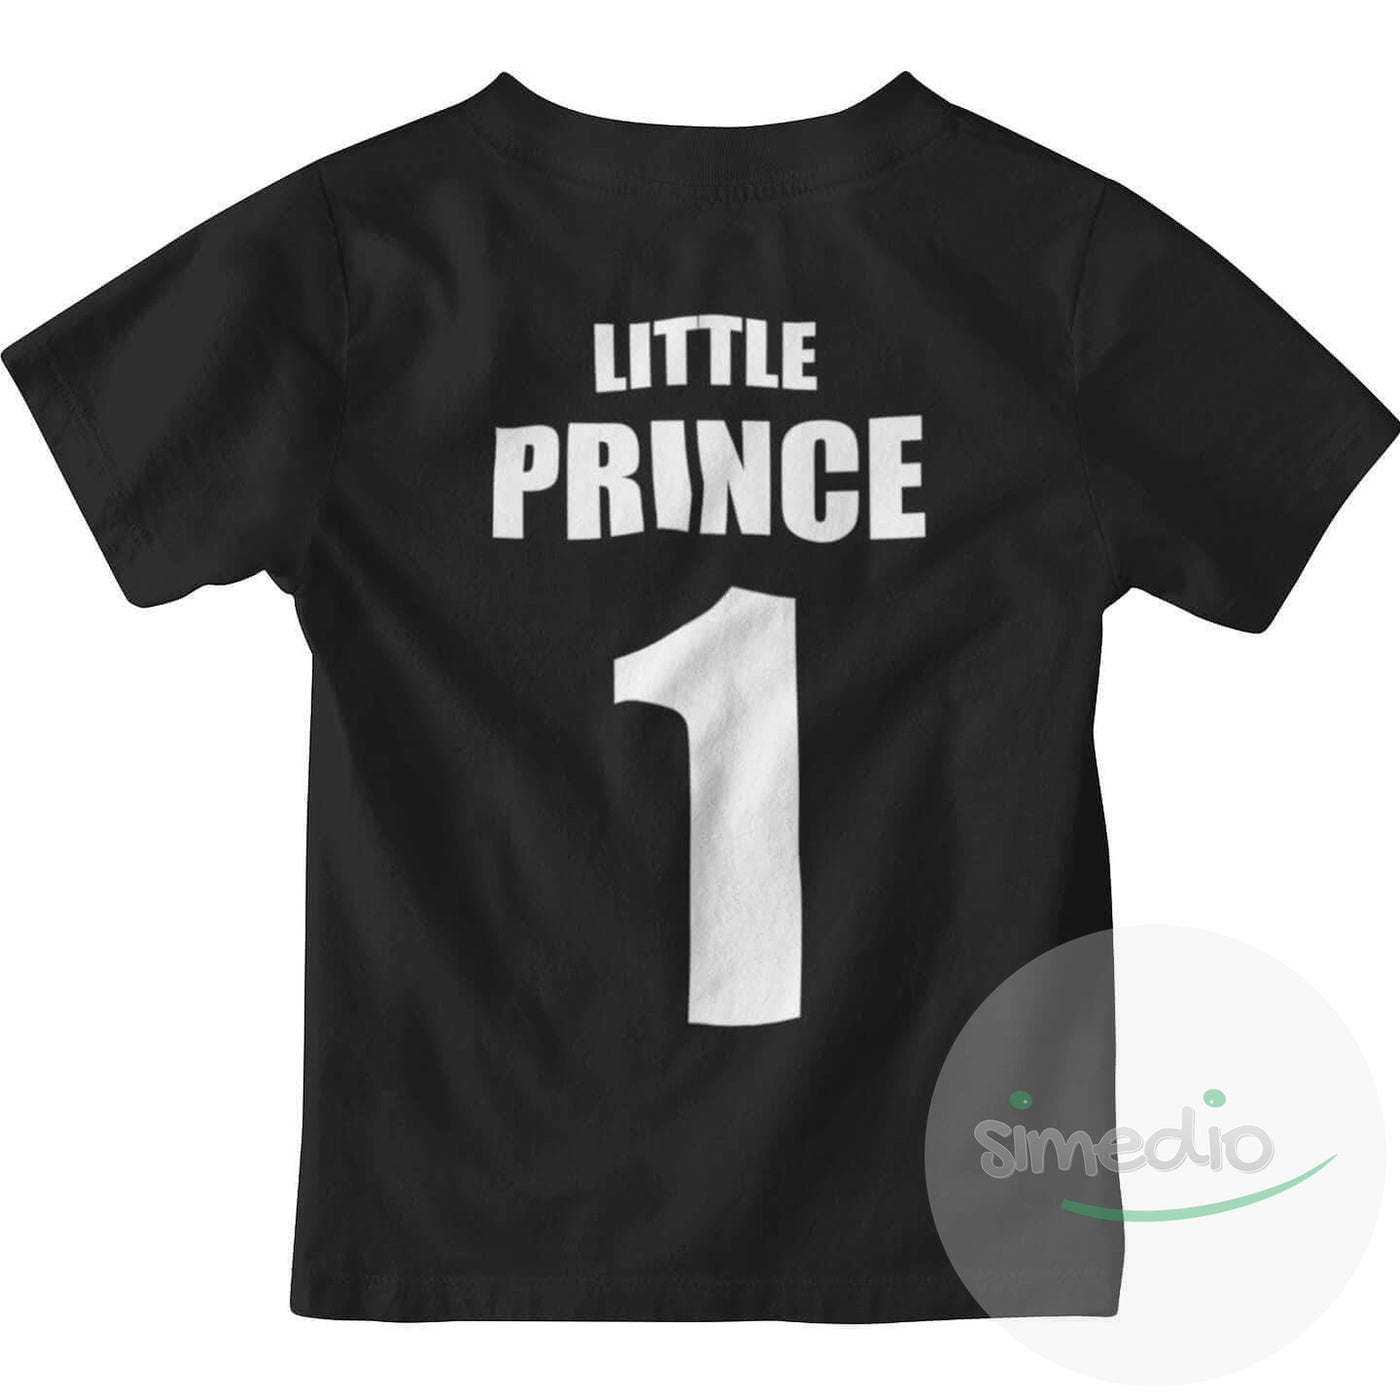 Tee shirt enfant original : PRINCE / PRINCESS, Little Prince, Noir, 2 ans - SiMEDIO